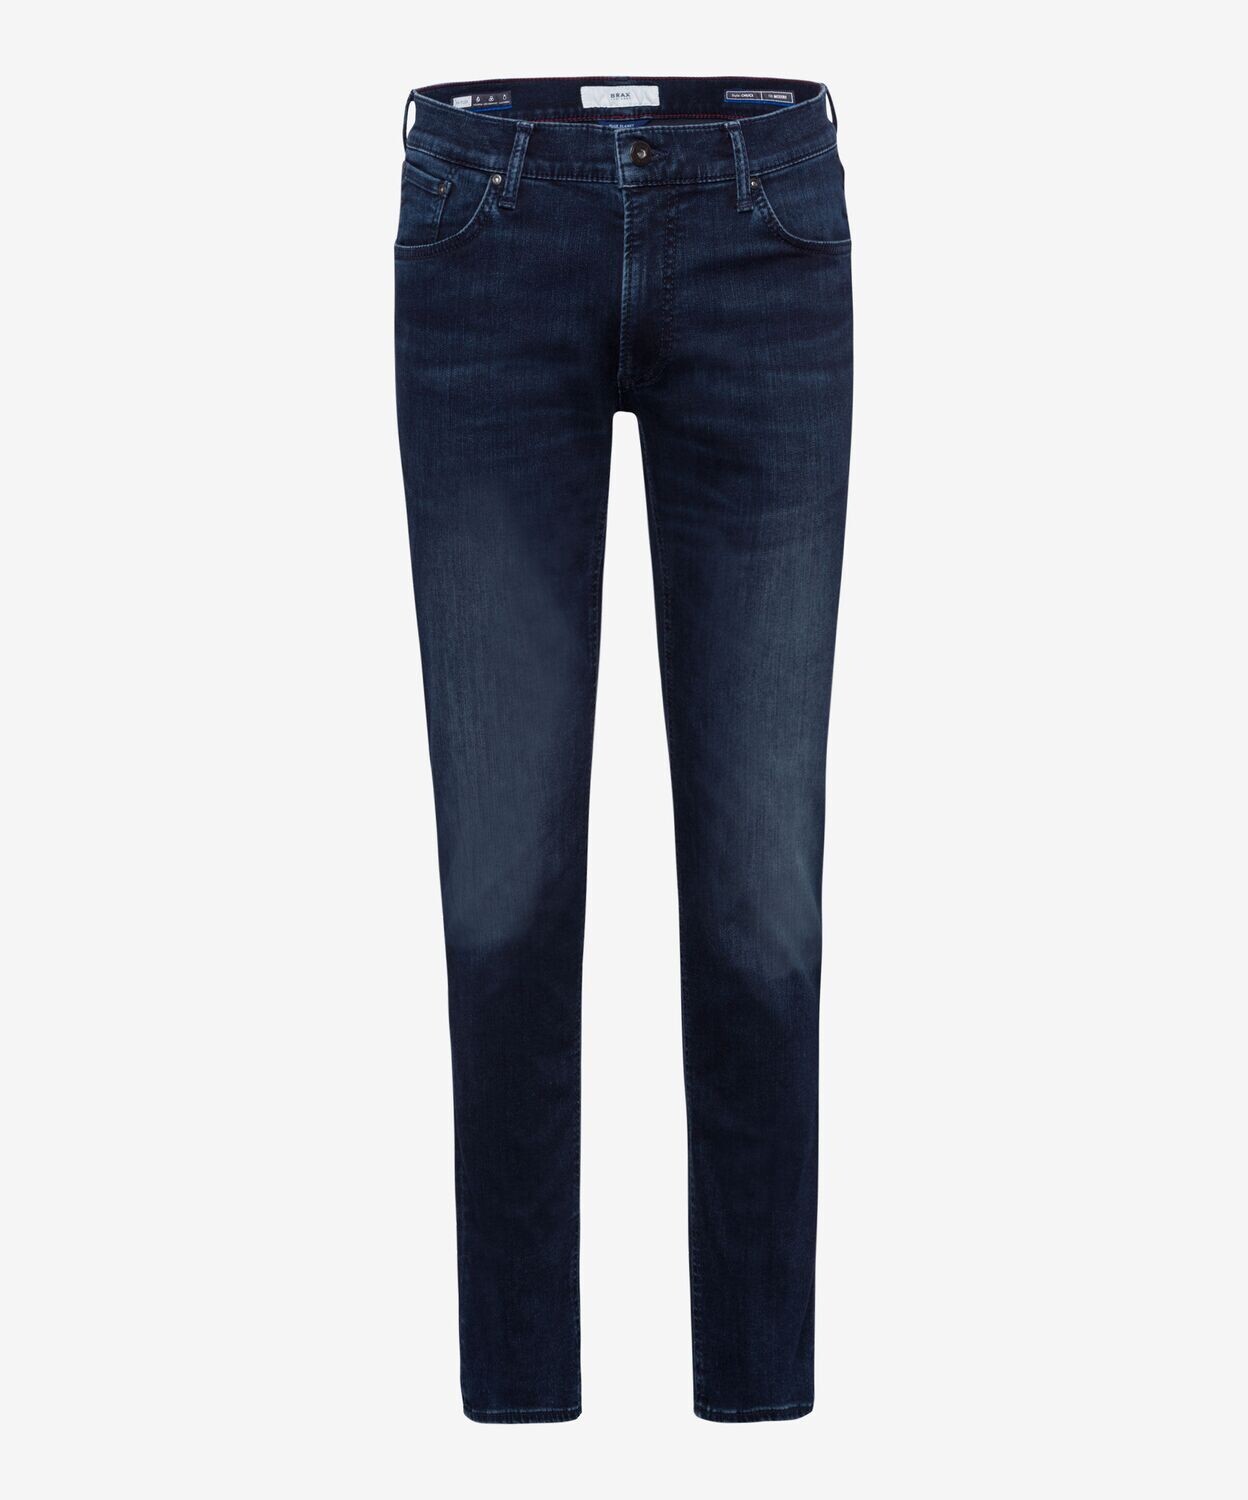 Brax Men chuck jeans, Size: 35L 36